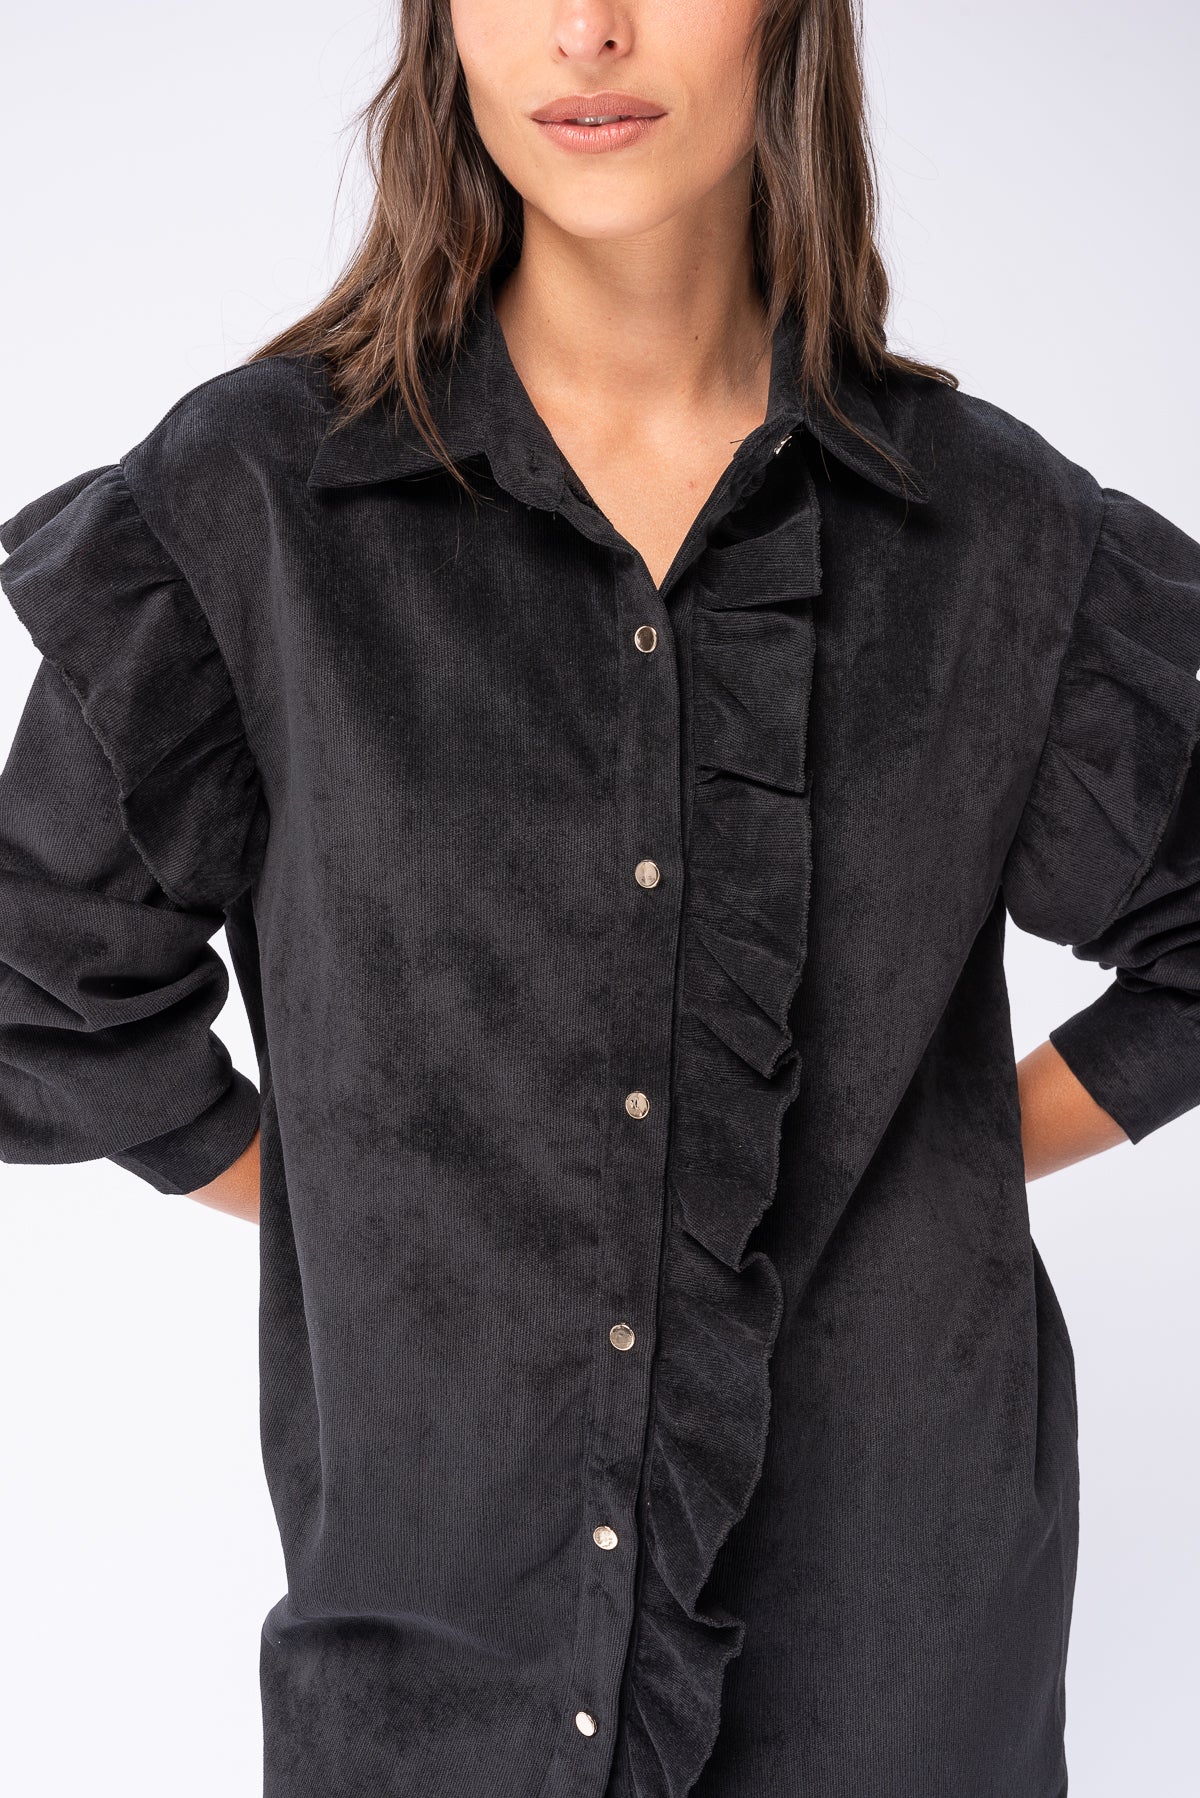 Camisa Larga Vivre Negra | Blusas, Camisas y Remeras | Viviana Méndez - Camisa Larga Vivre Negra - Viviana Méndez